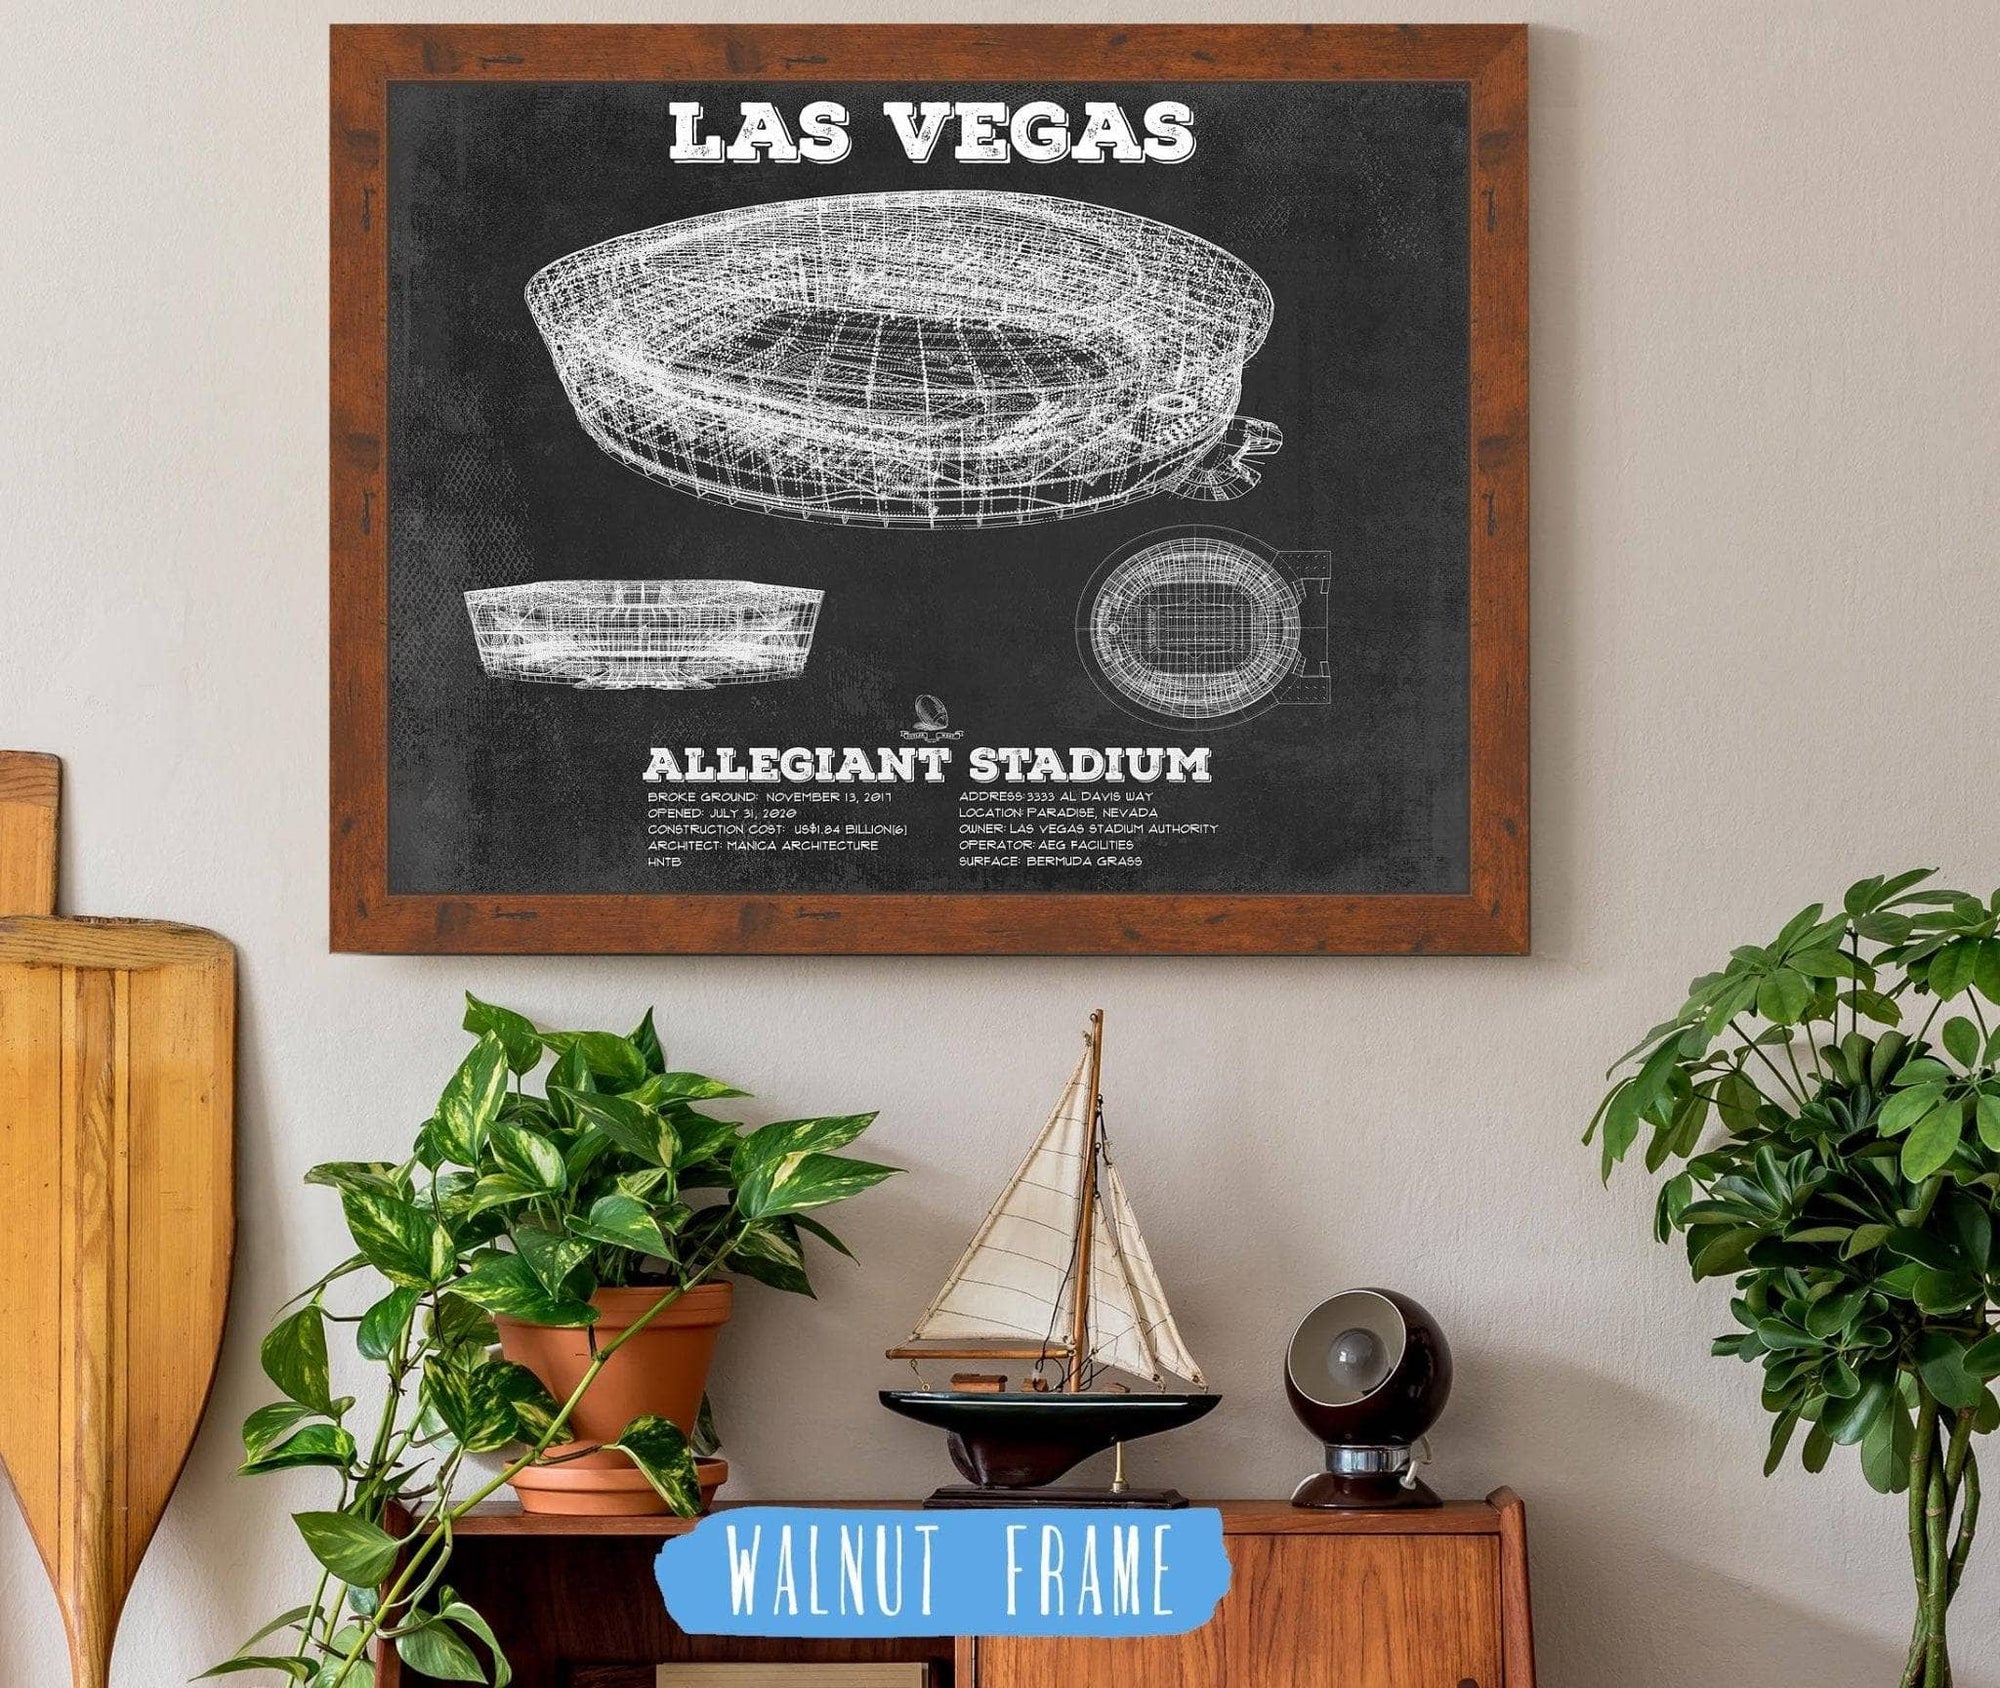 Cutler West Pro Football Collection 14" x 11" / Walnut Frame Las Vegas Raiders Allegiant Stadium Vintage Football Print 845000118-TOP